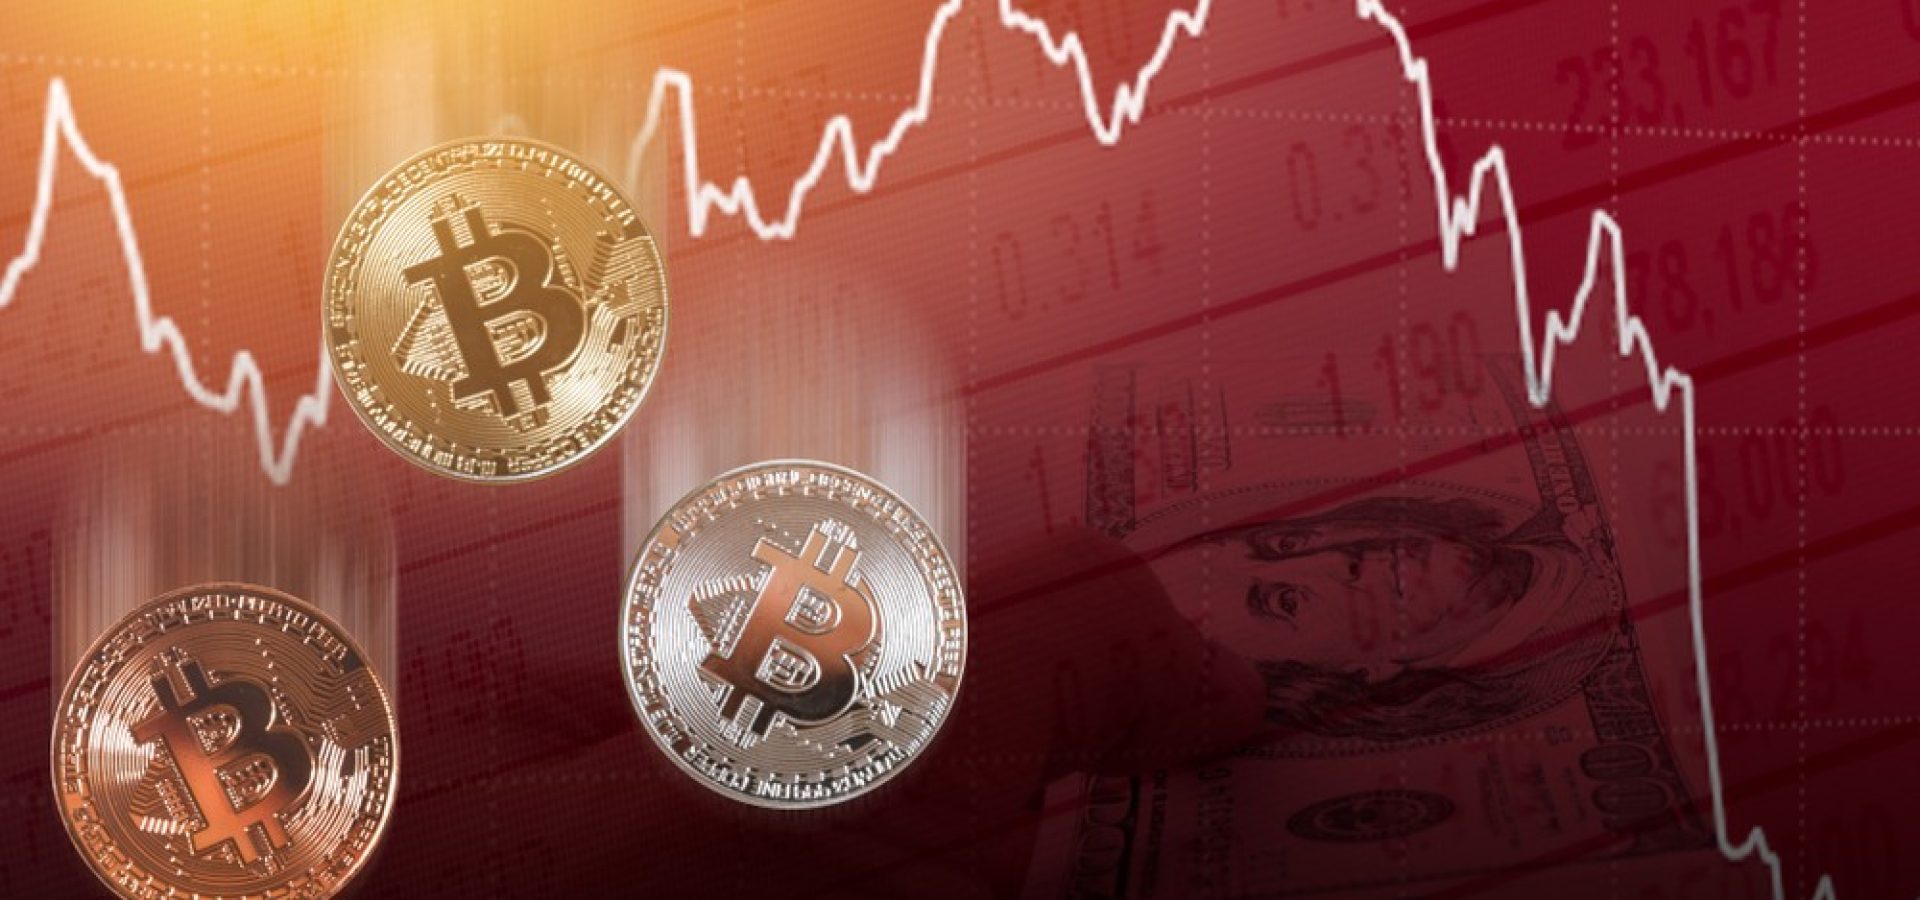 Bitcoin drops by 10% as China makes anti-crypto moves